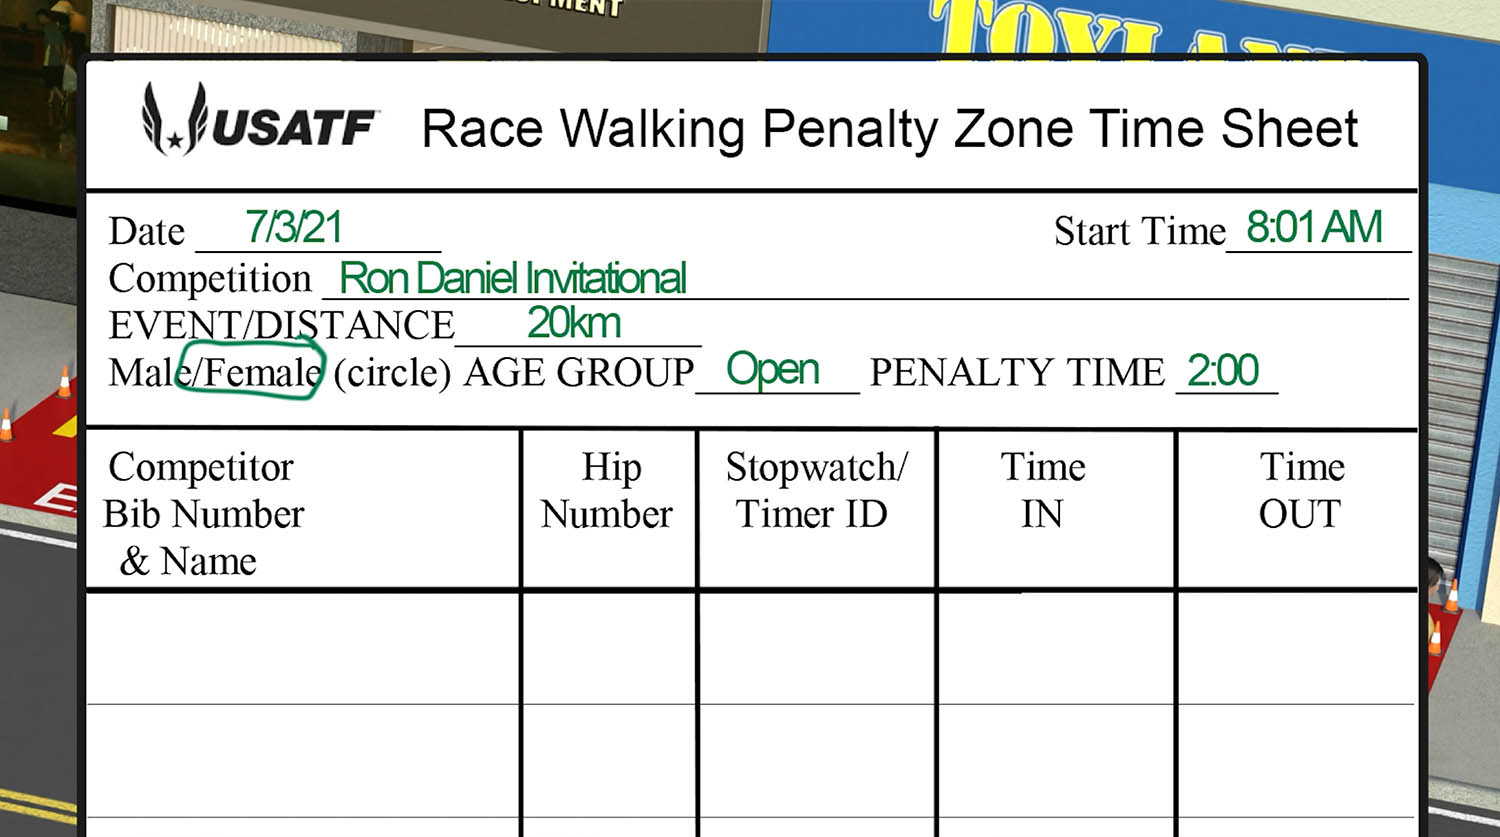 Penalty Zone Sheet - Initial Info